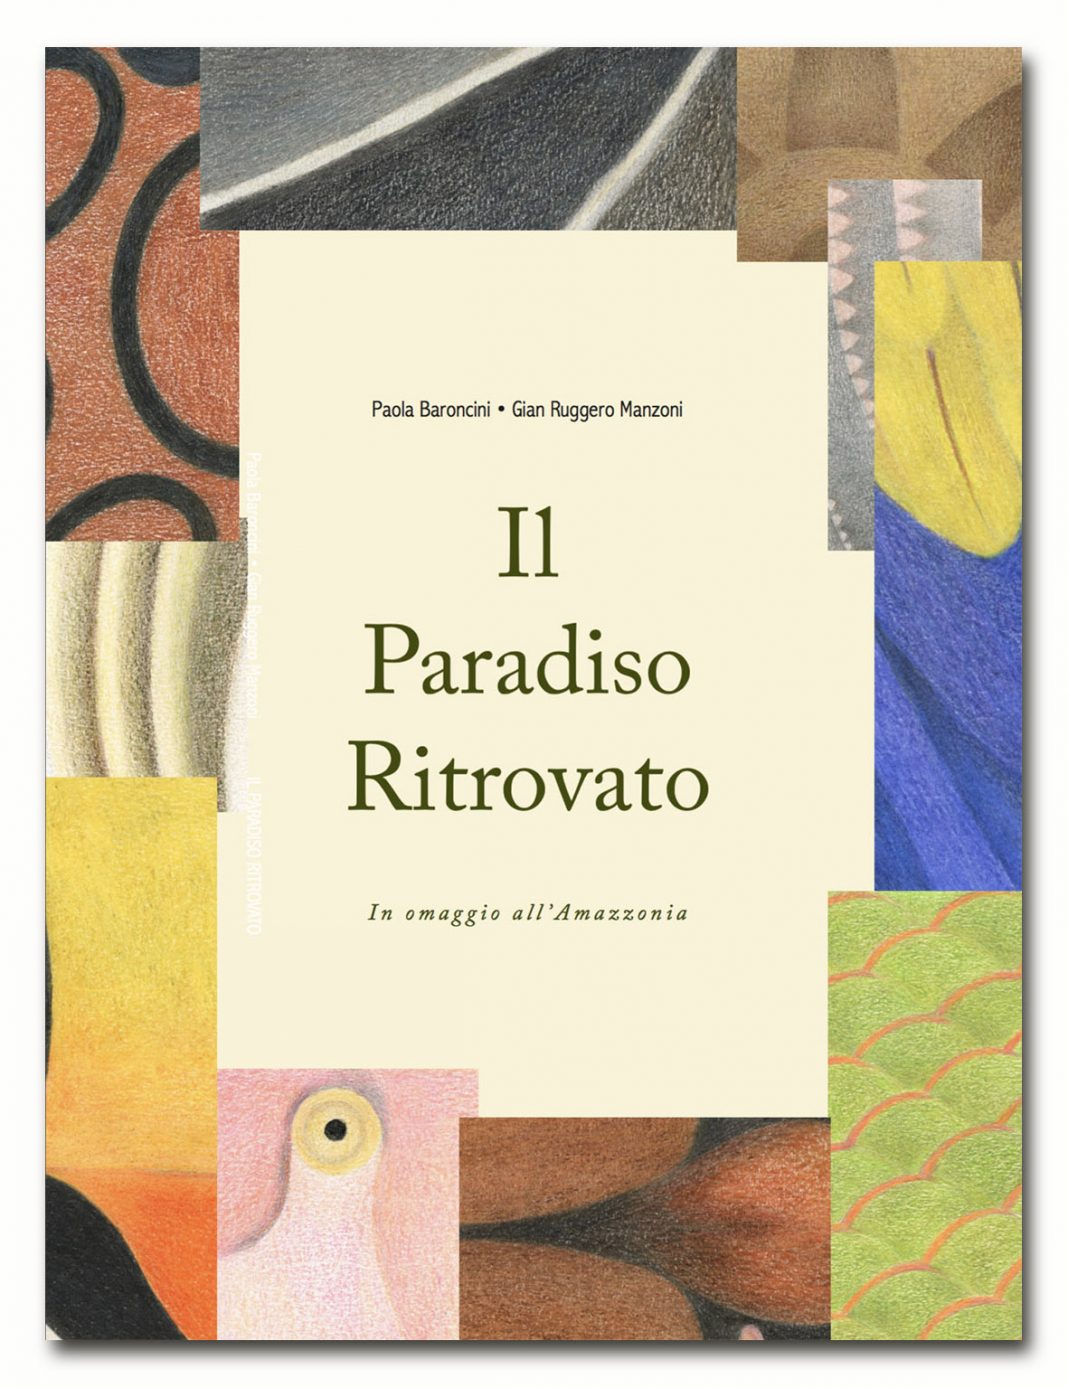 Paola Baroncini / Gian Ruggero Manzoni – Il Paradiso ritrovatohttps://www.exibart.com/repository/media/formidable/11/copertina-parad-1-1068x1388.jpg